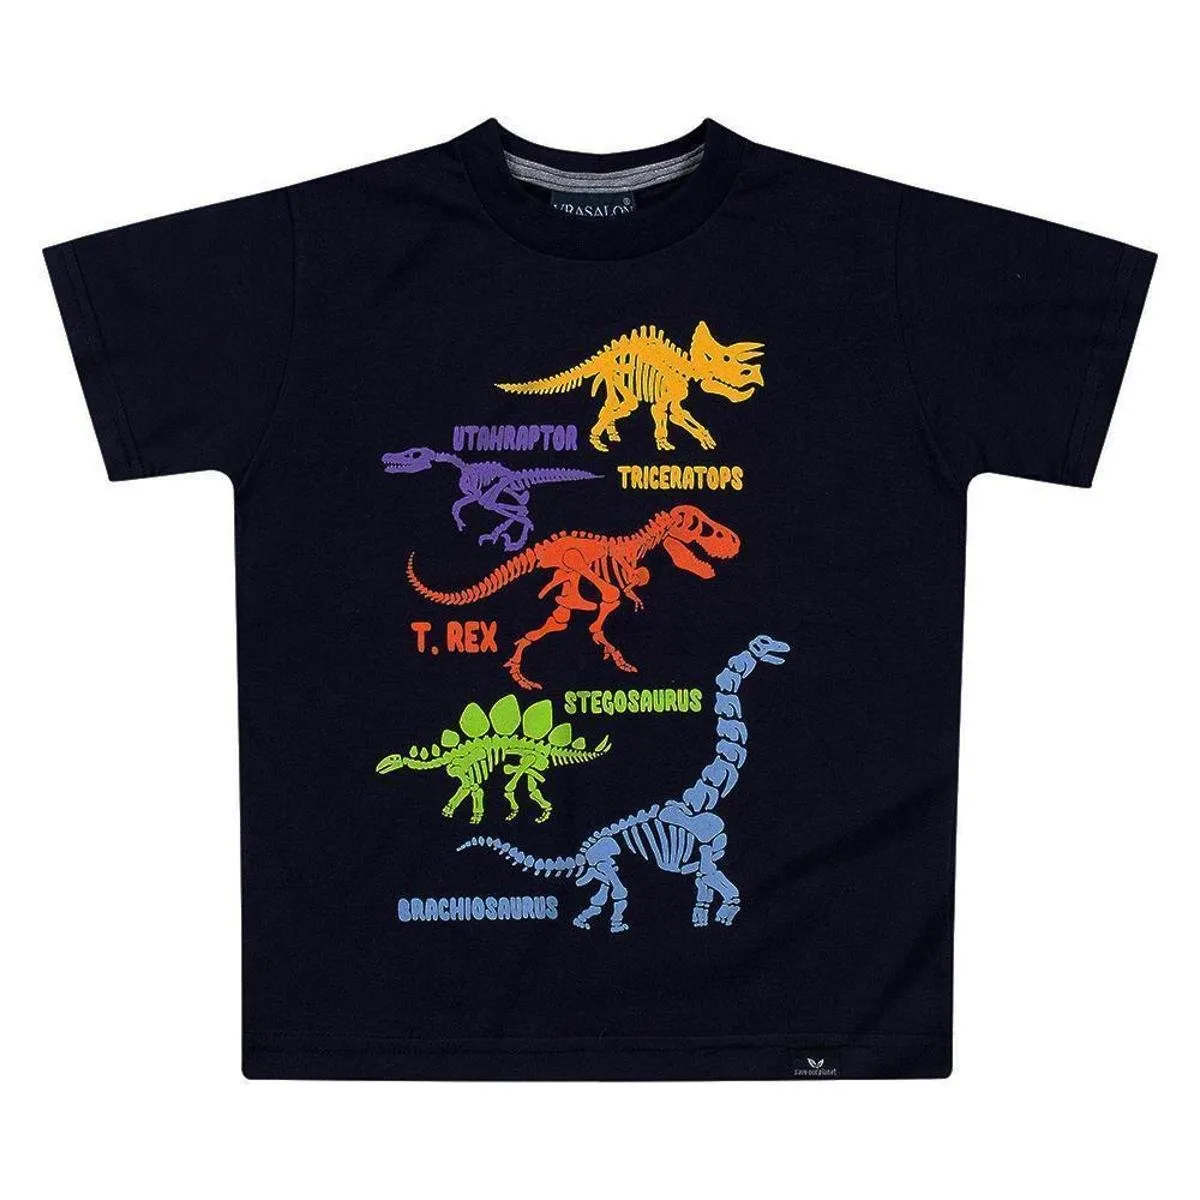 Camiseta Manga Curta Vrasalon Dinossauros Ref: 345.581 1/3